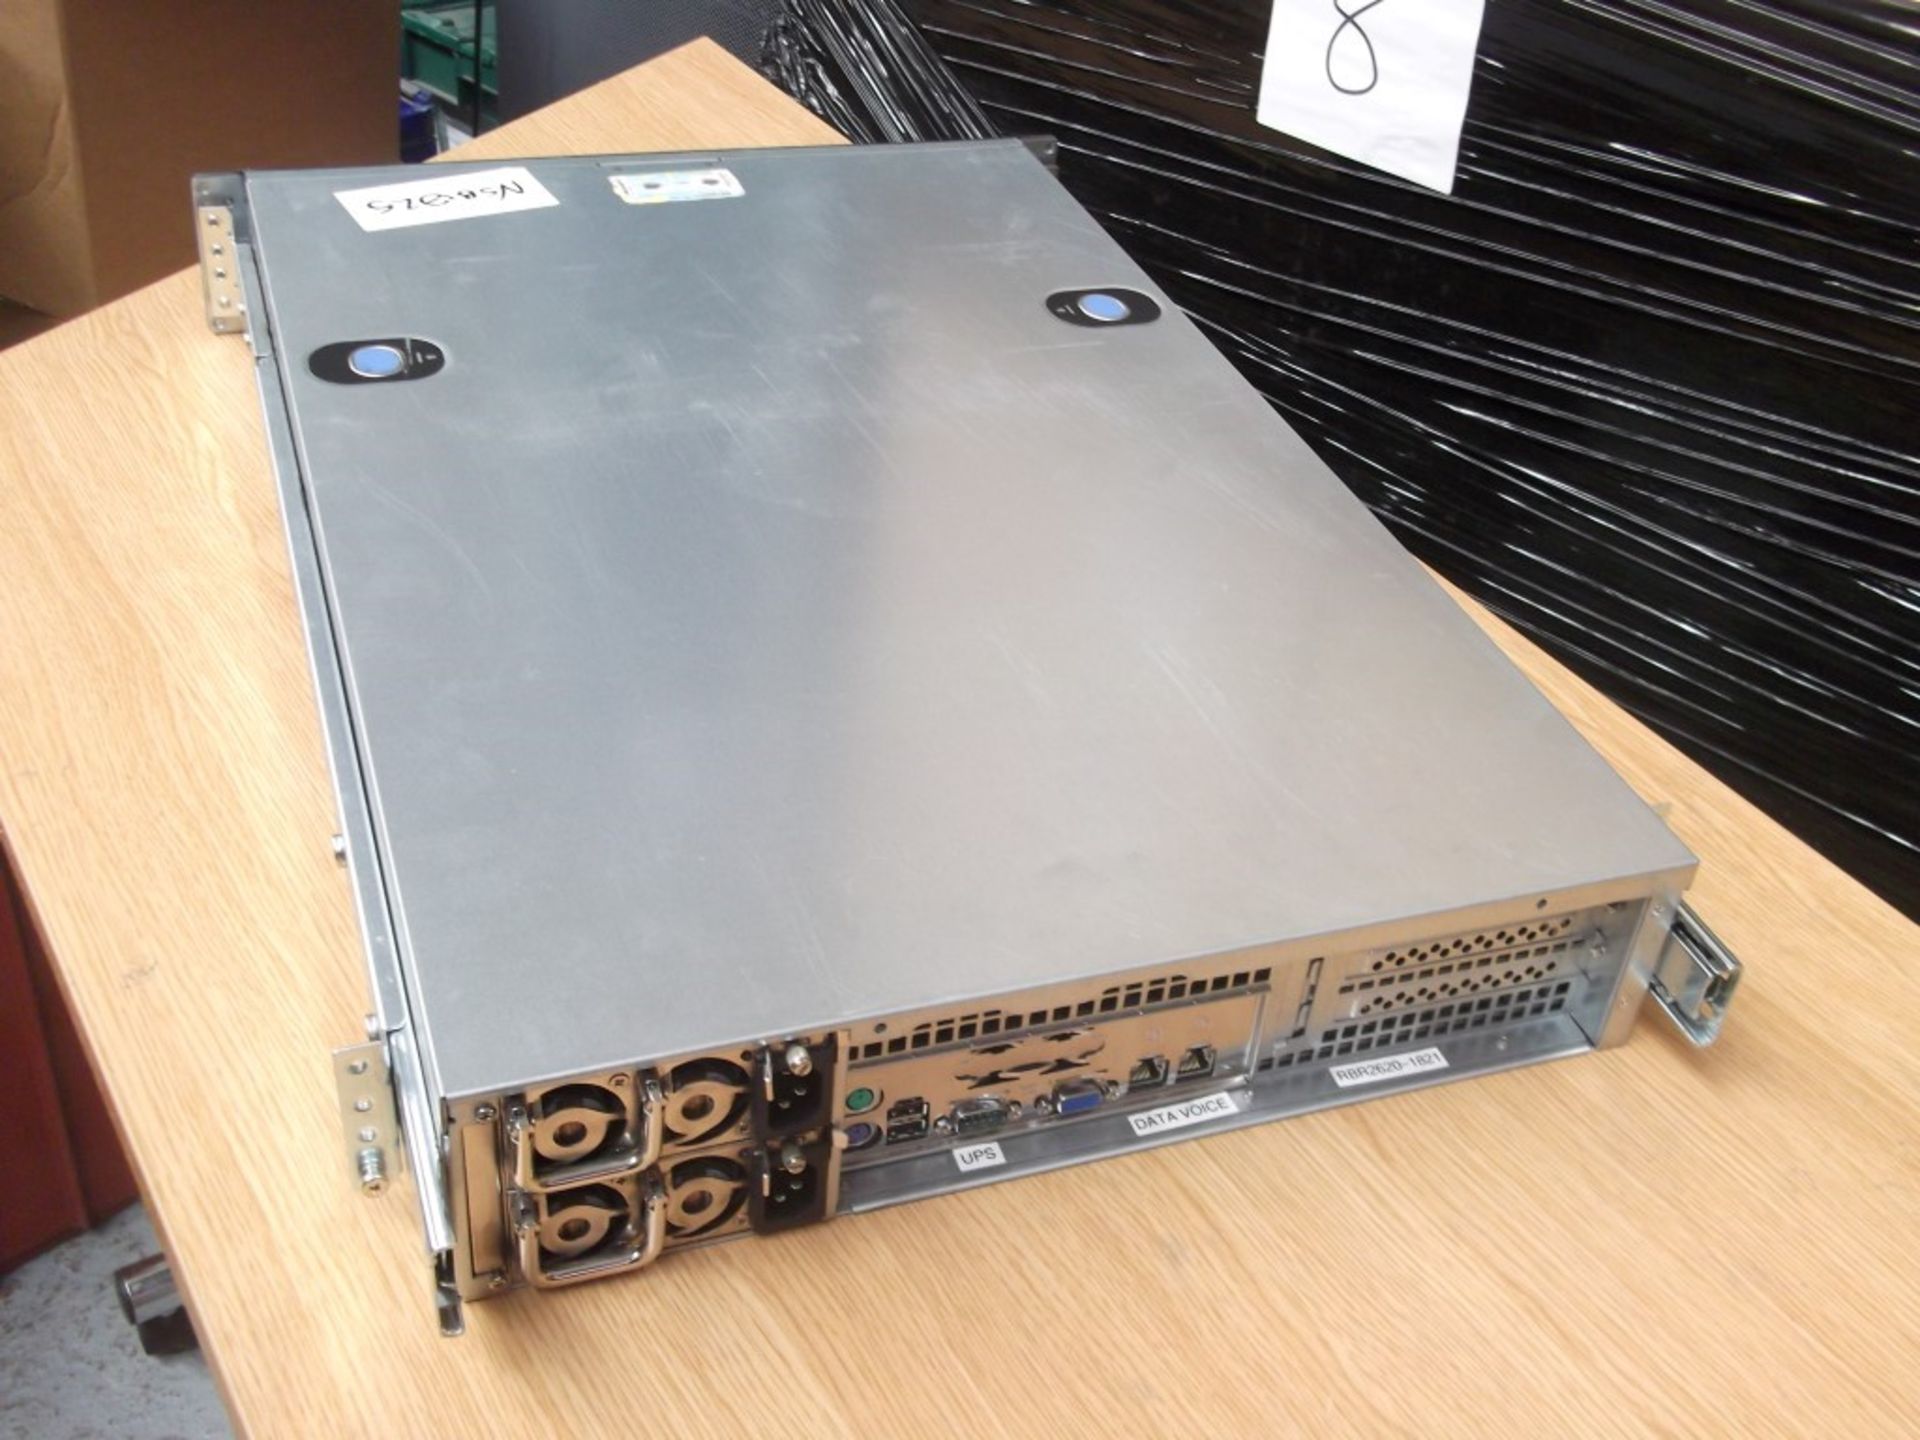 1 x Redbox Recorder - Enterprise IPT / Voice Recording Rackmount Server - Model RBR 2620 - Core 2 - Image 2 of 5